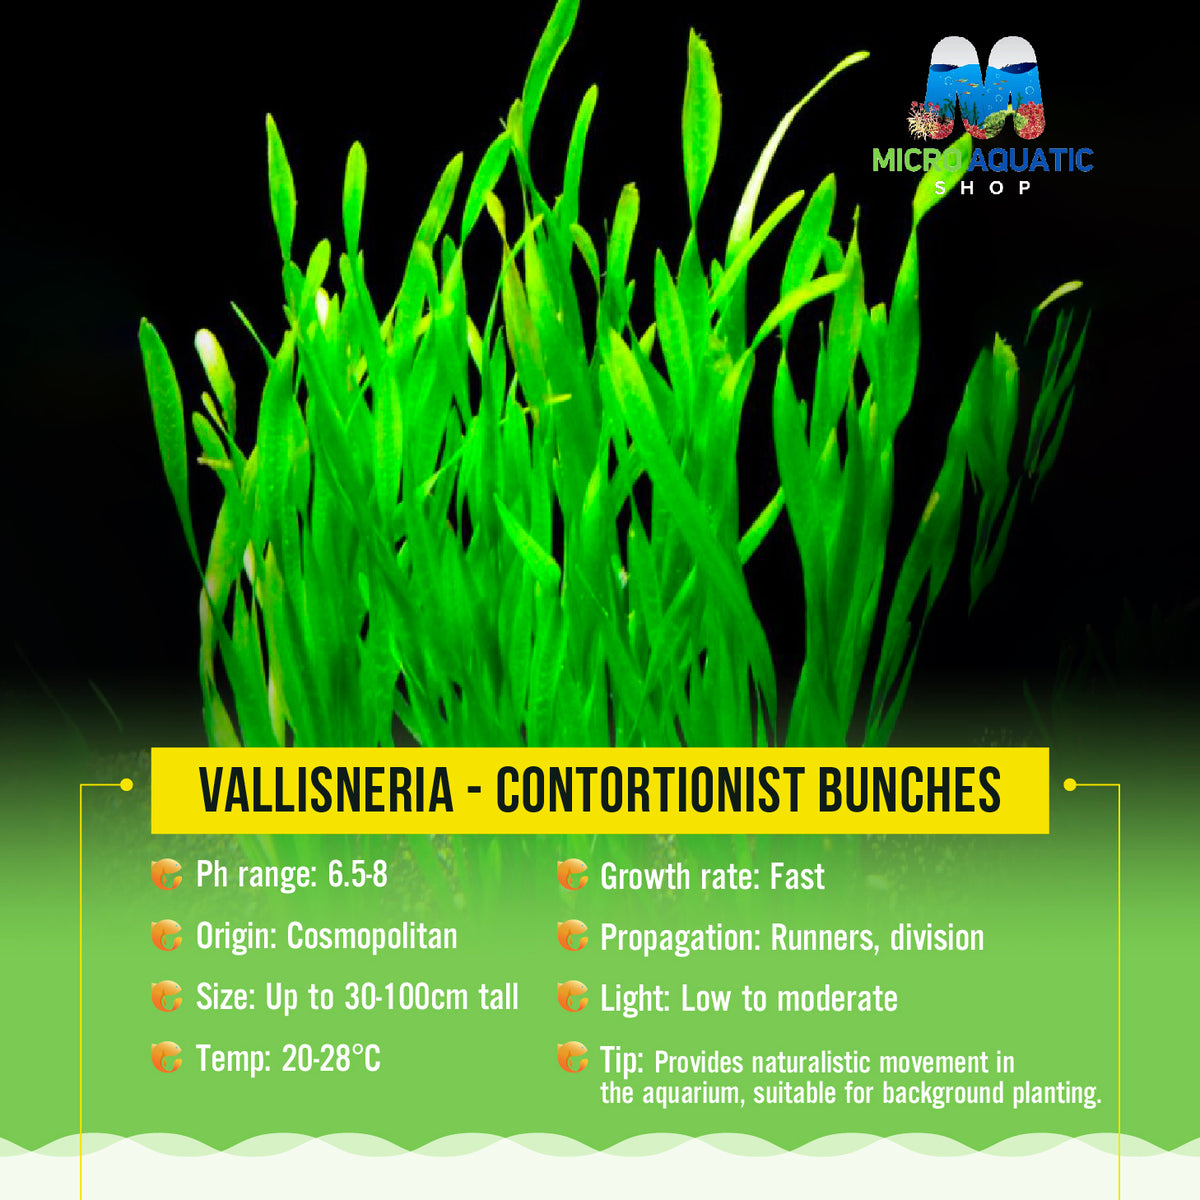 Vallisneria - Contortionist Bunches